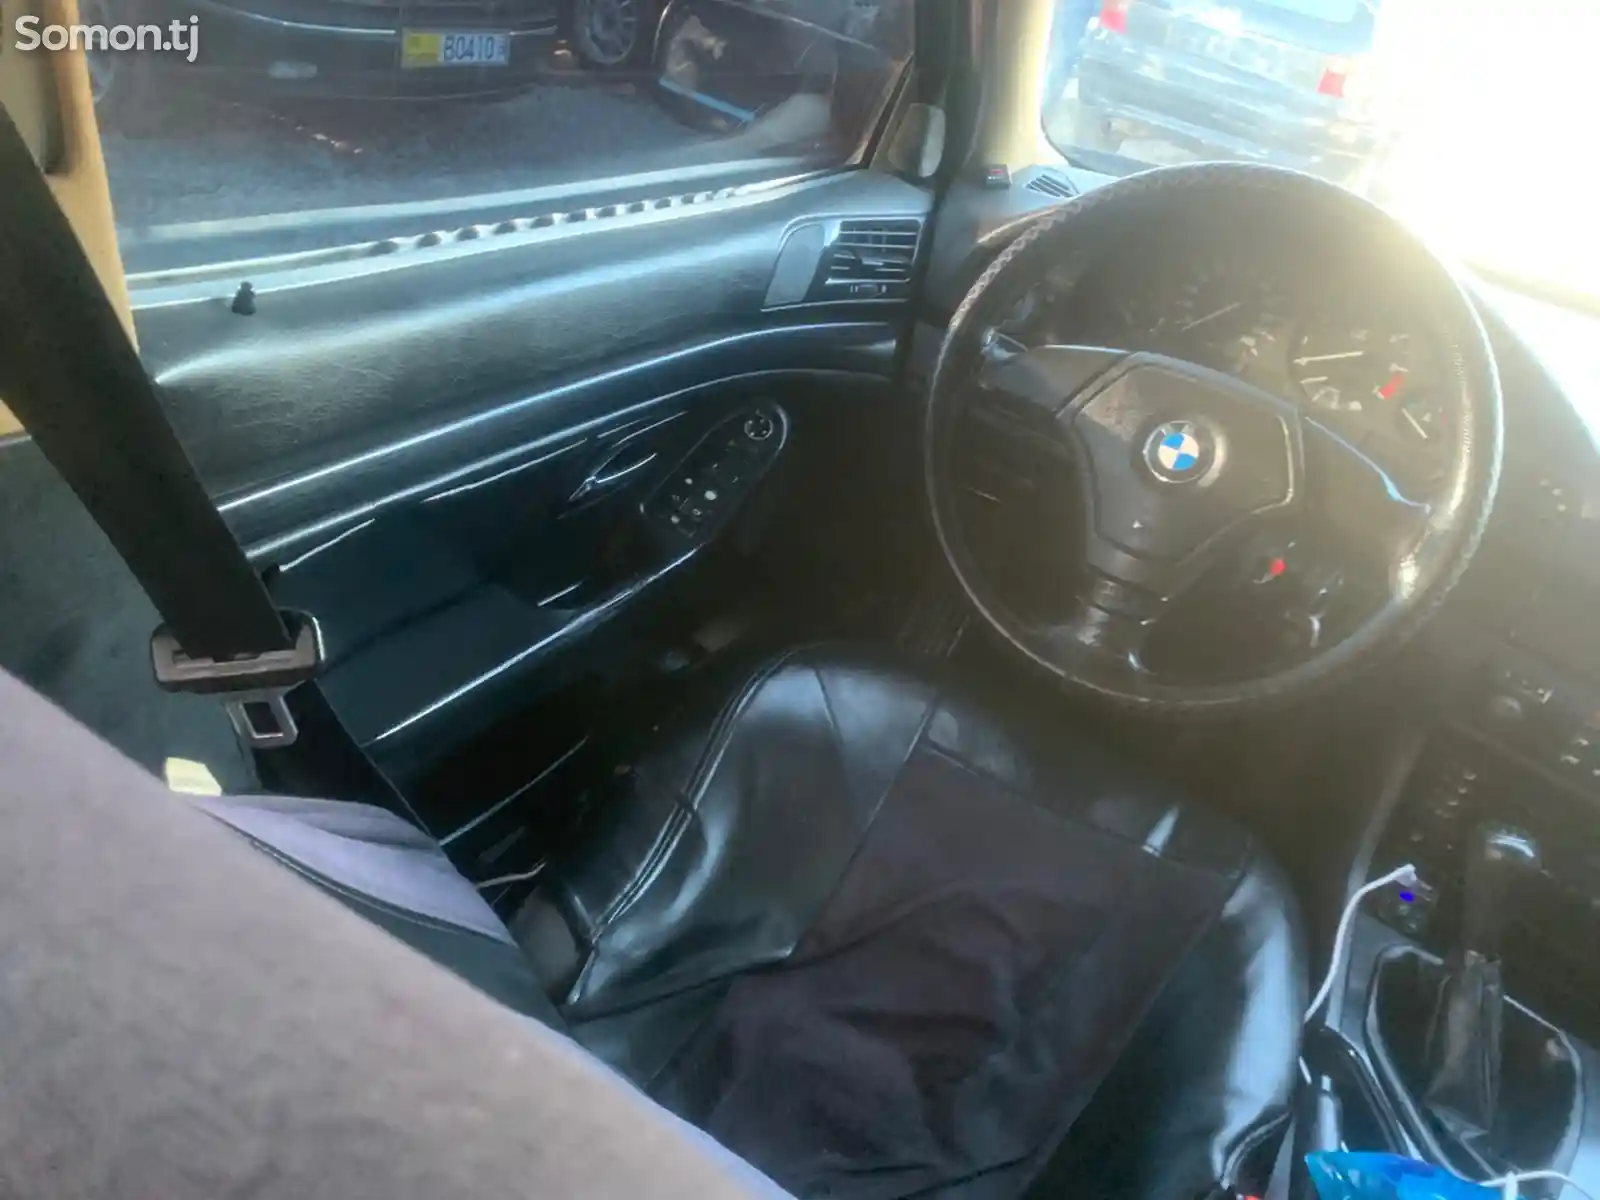 BMW 5 series, 2001-8